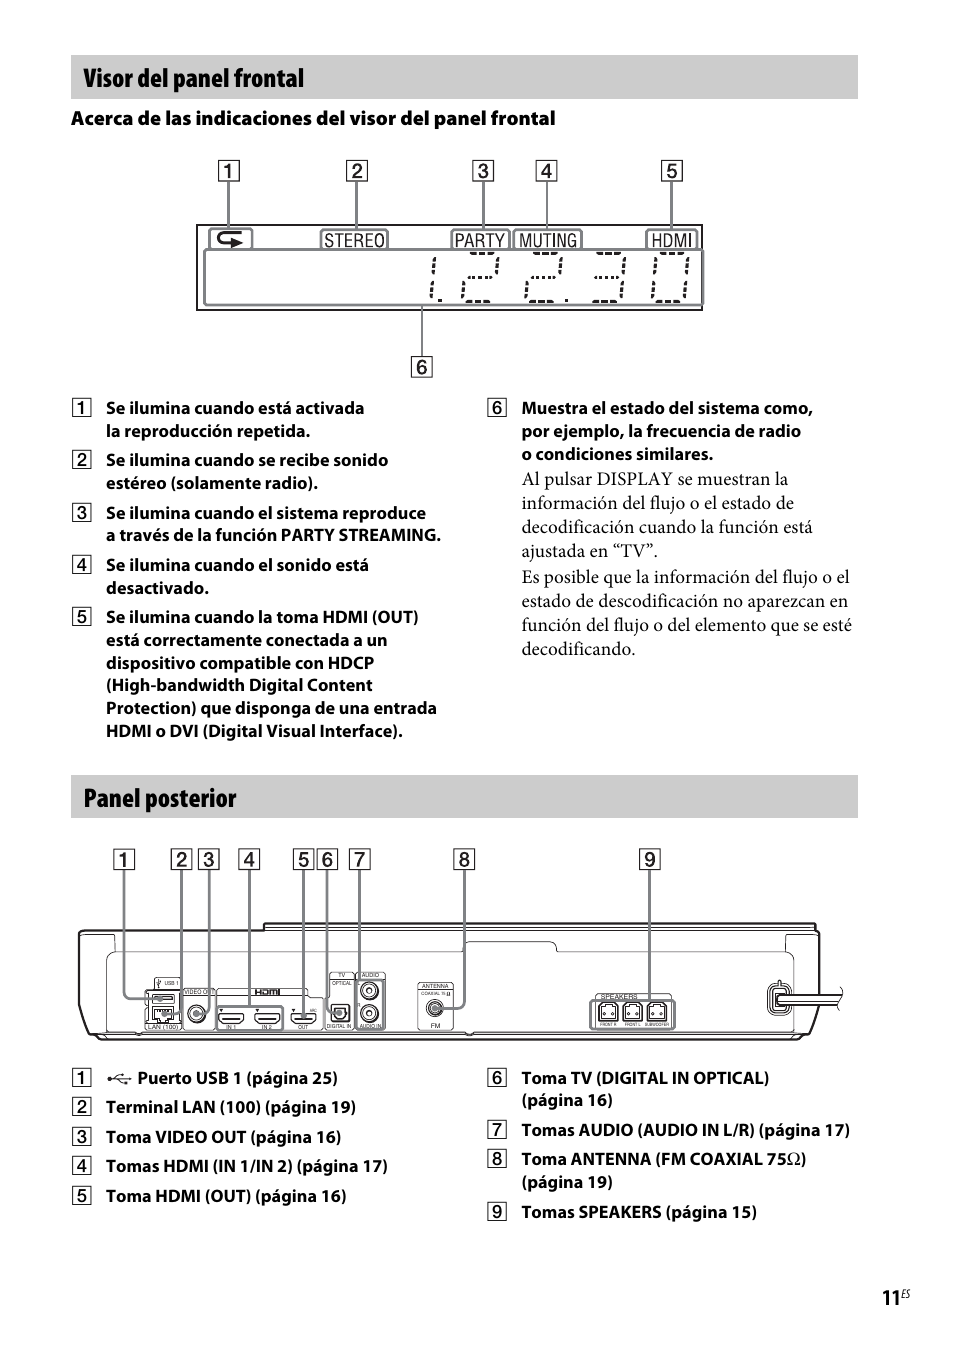 Visor del panel frontal, Panel posterior, Visor del panel frontal panel posterior | Sony BDV-NF620 Manual del usuario | Página 11 / 62